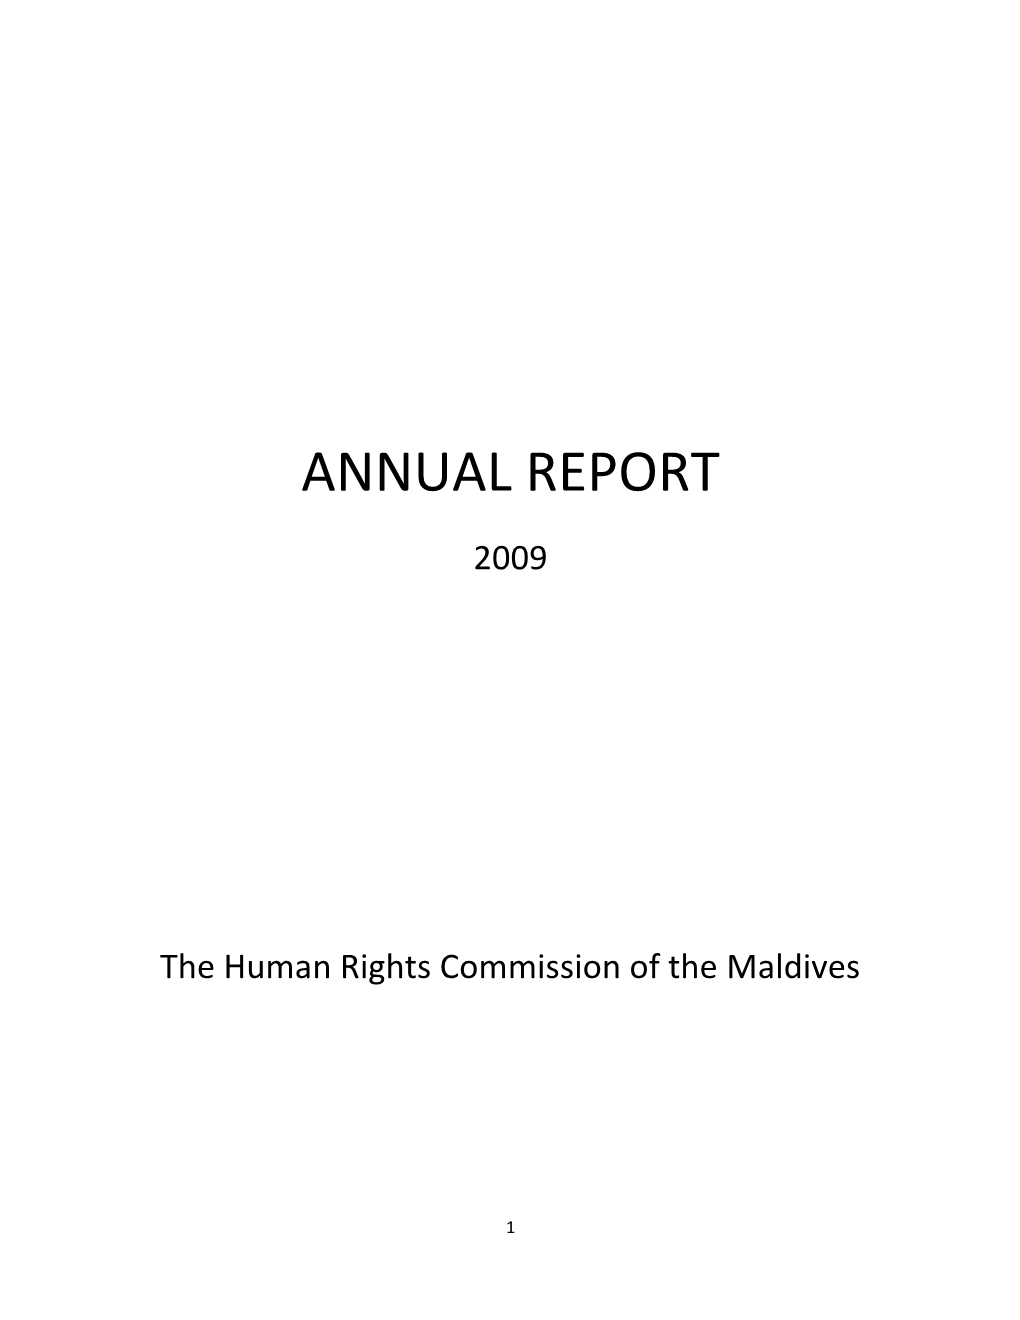 Annual Report 2009 English